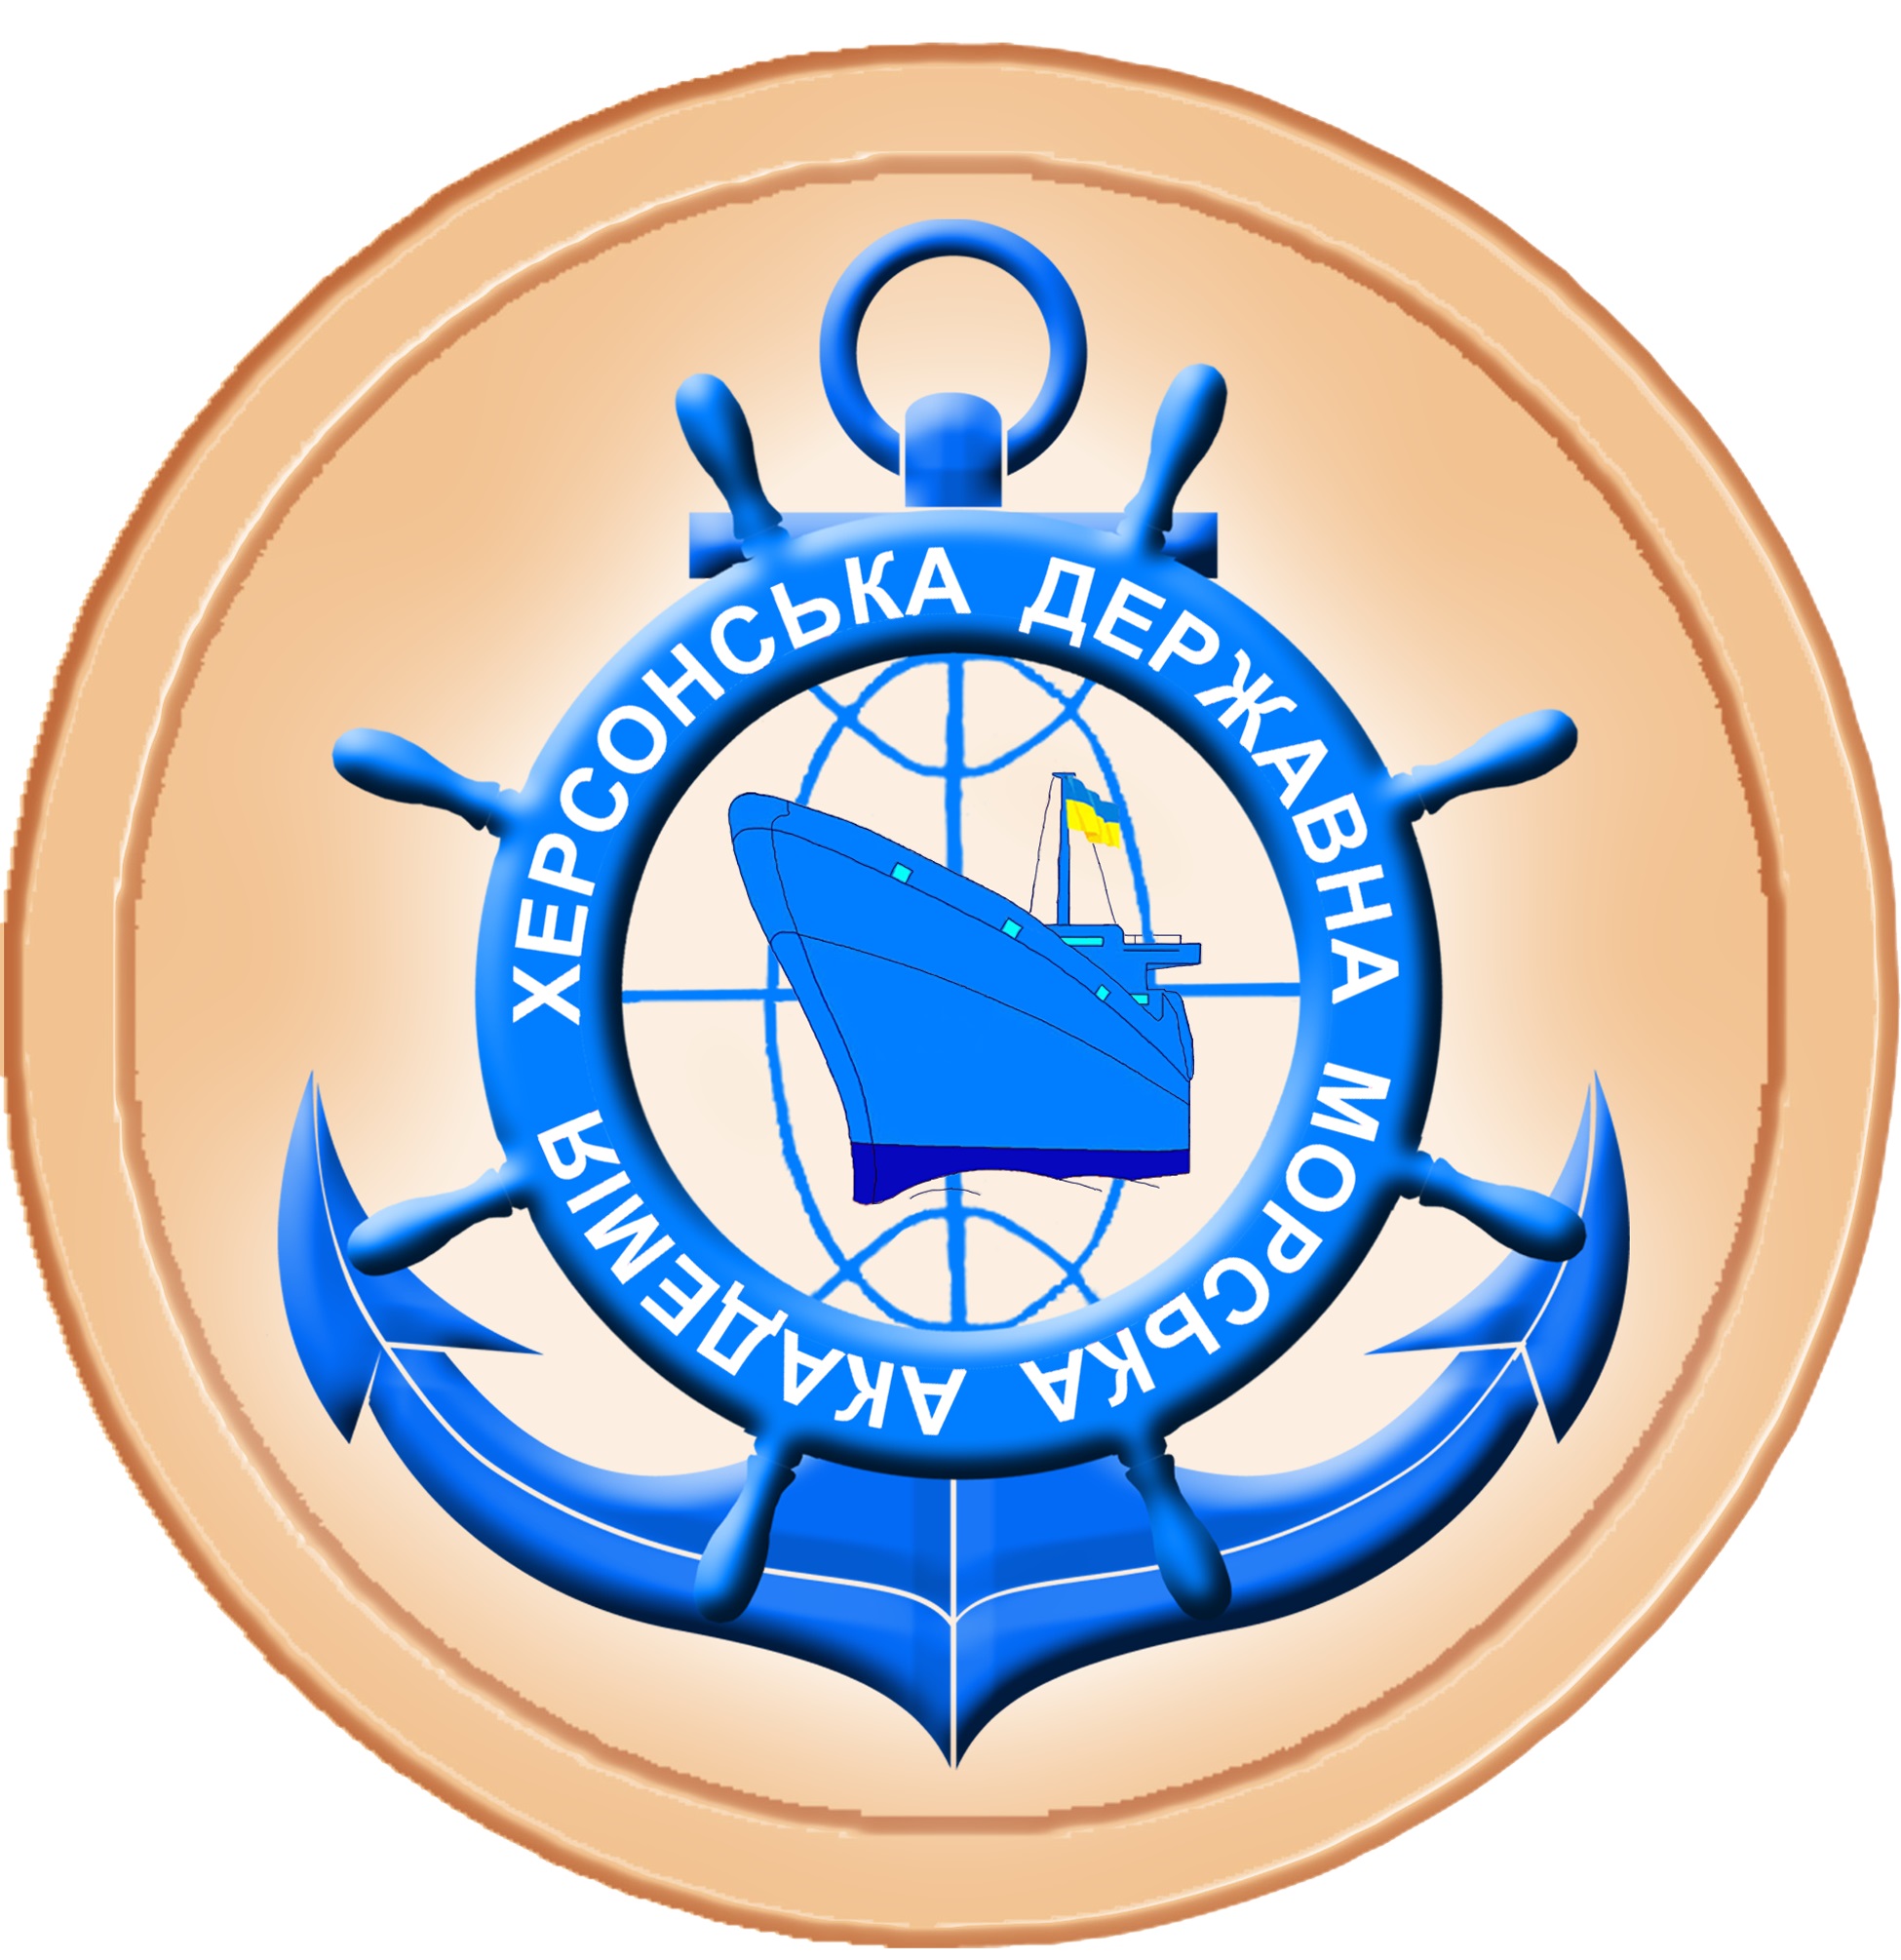 Kherson State Maritime Academy